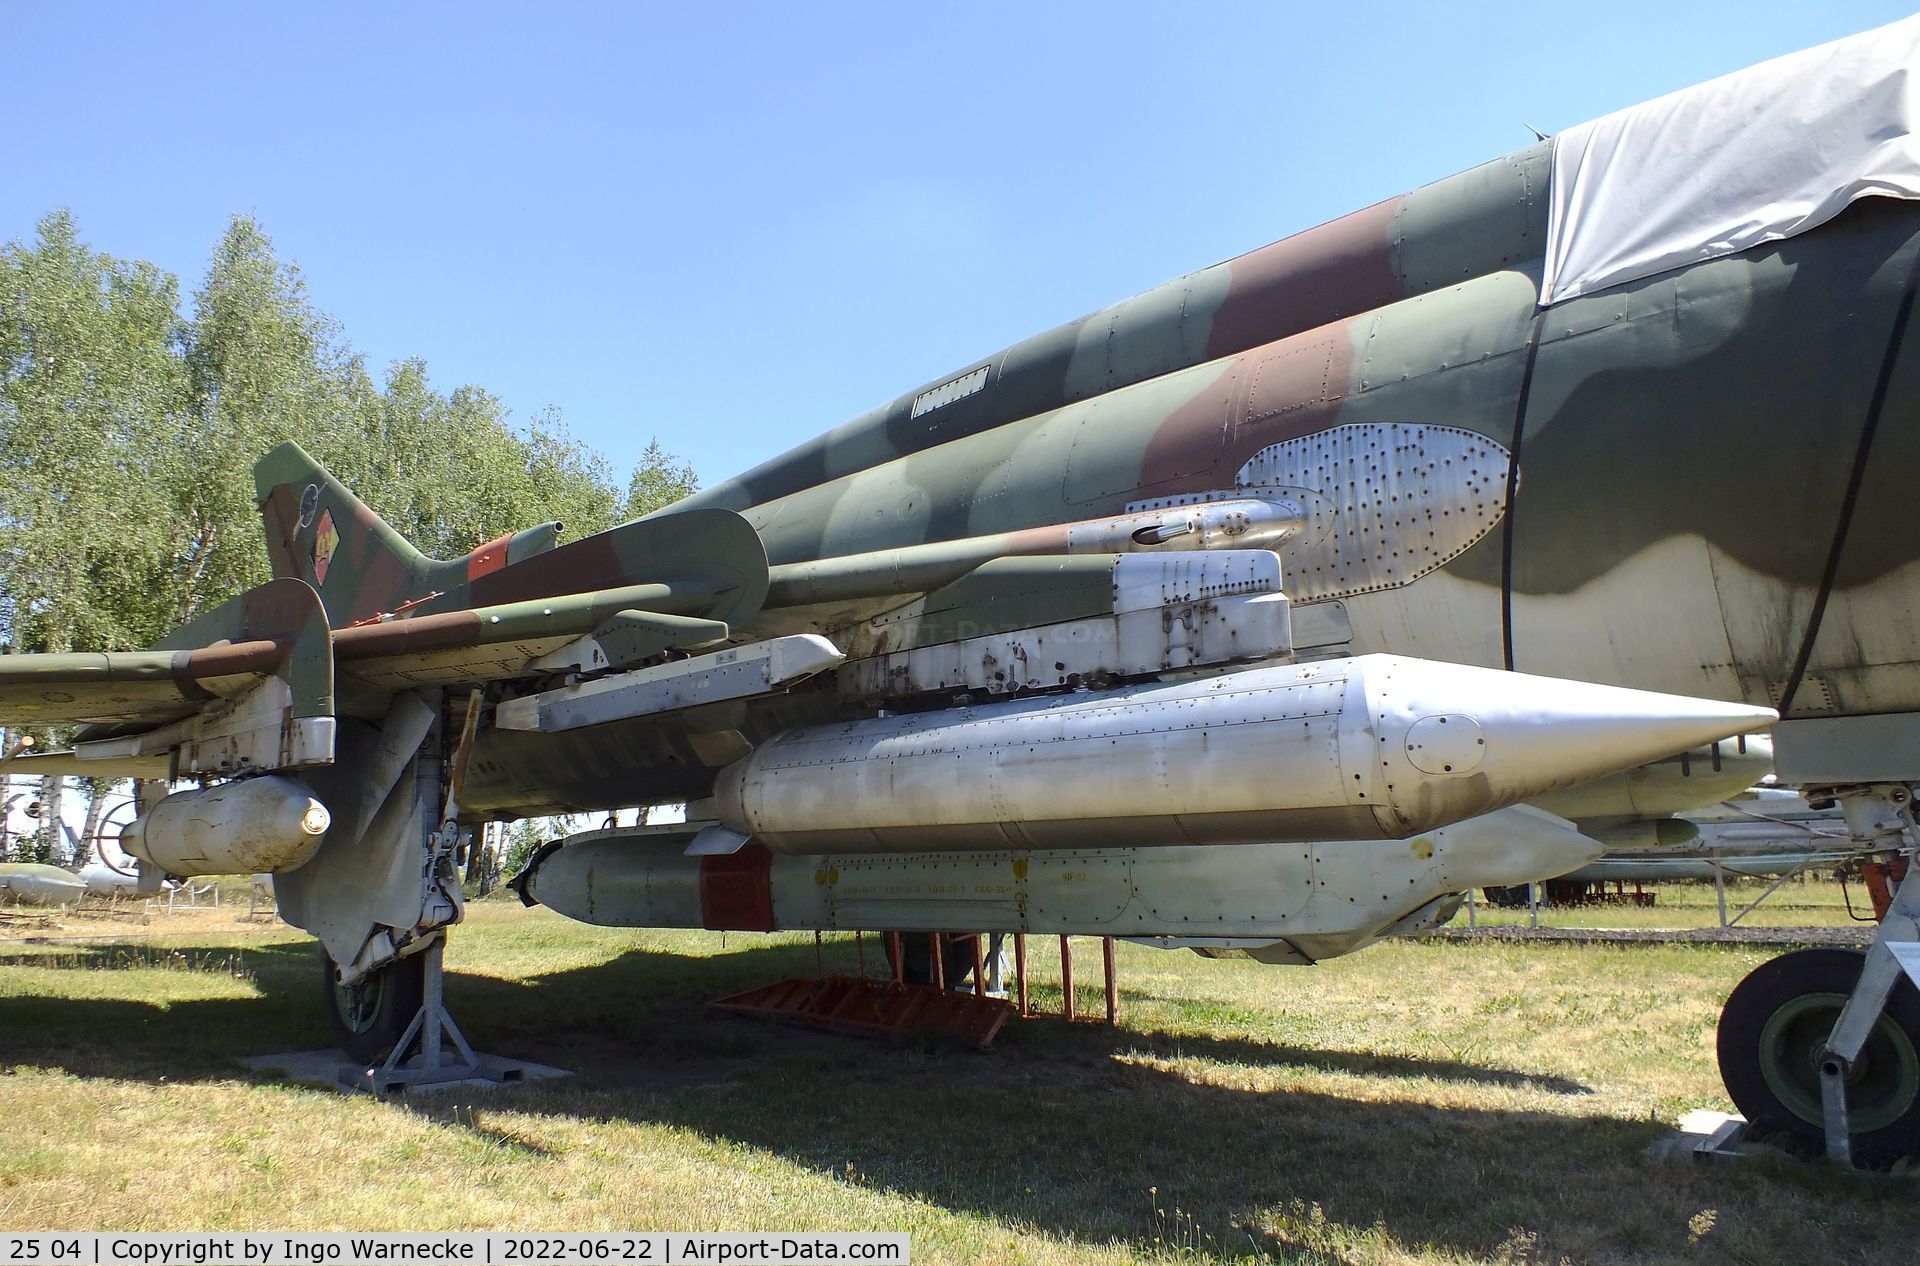 25 04, Sukhoi Su-22M-4 C/N 25511, Sukhoi Su-22M-4 FITTER-K (with recce and electronic warfare pods) at the Flugplatzmuseum Cottbus (Cottbus airfield museum)